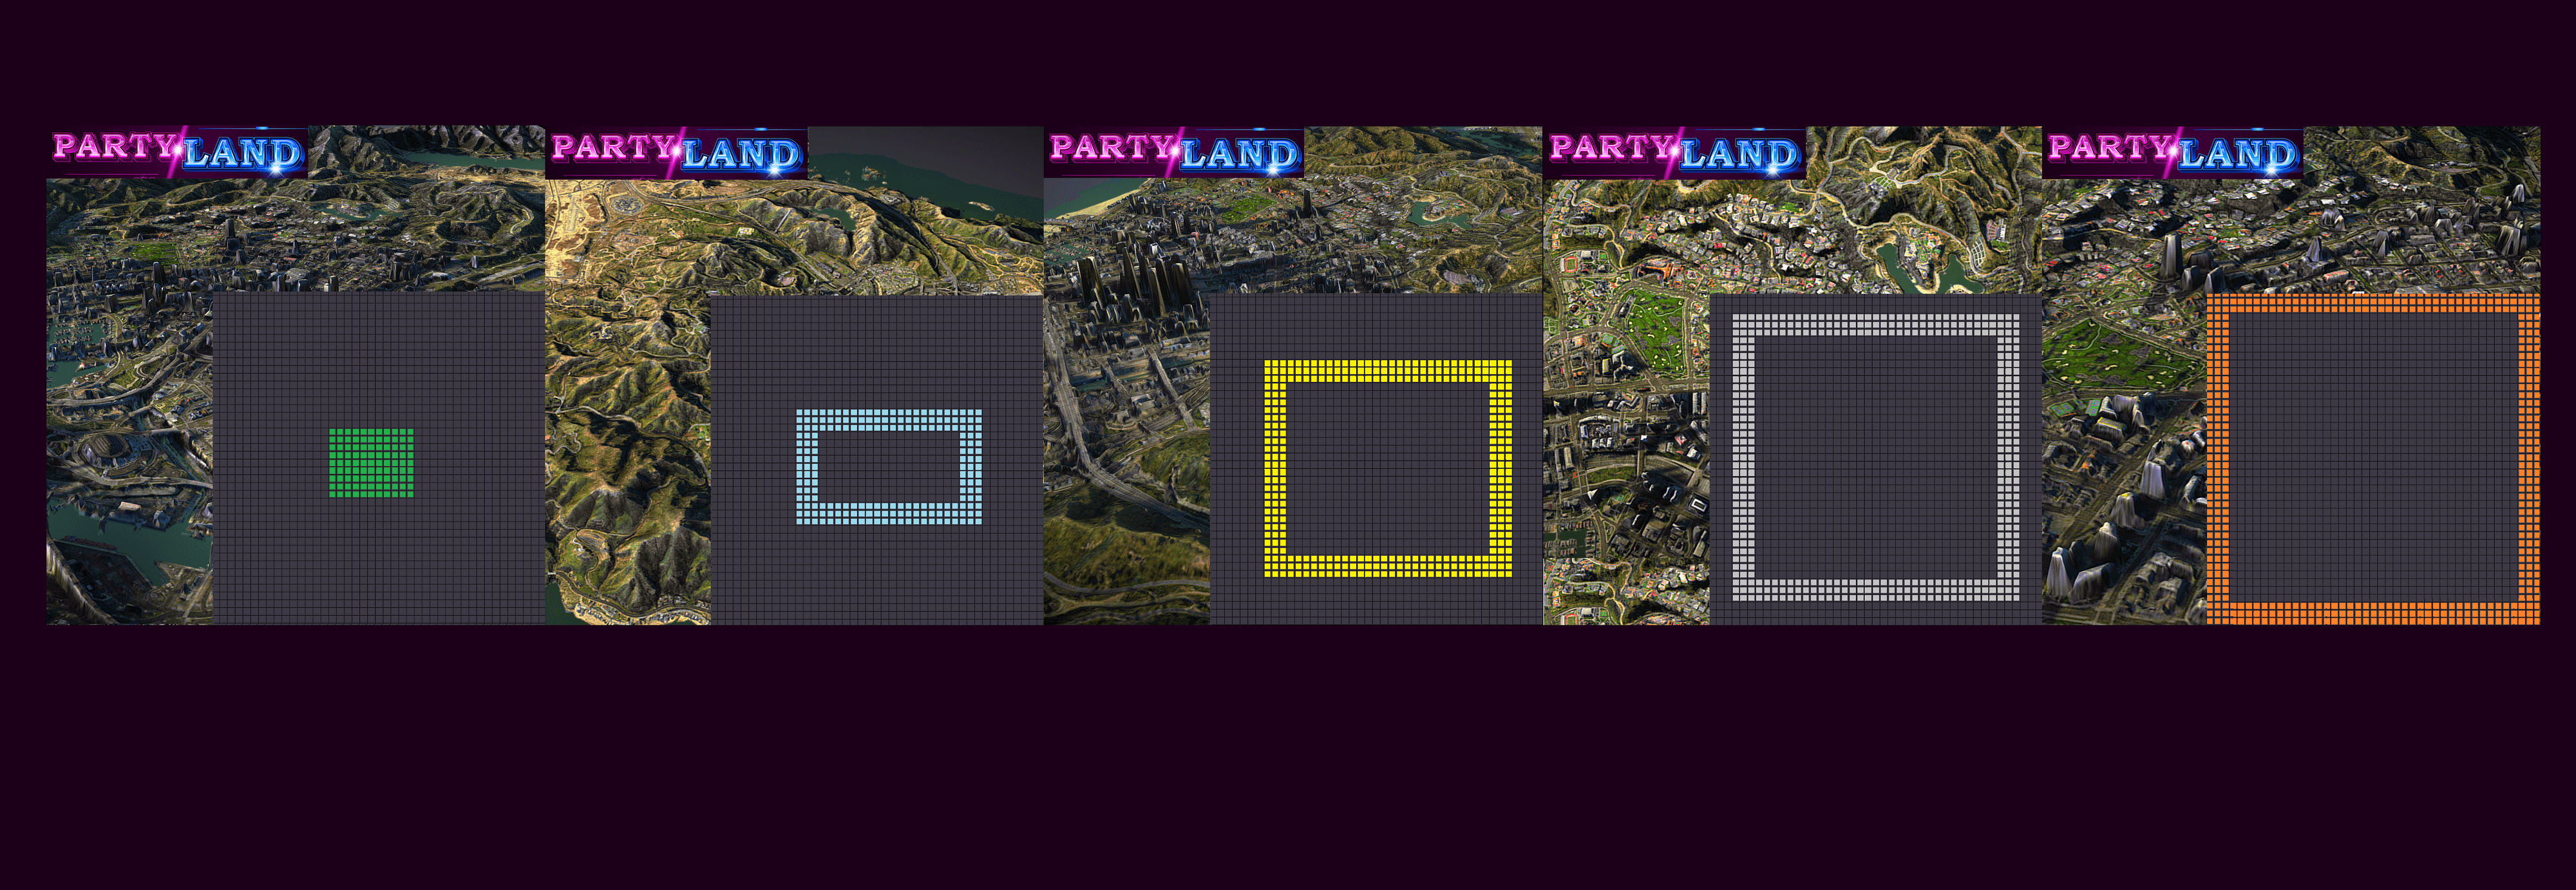 Partylandmeta banner